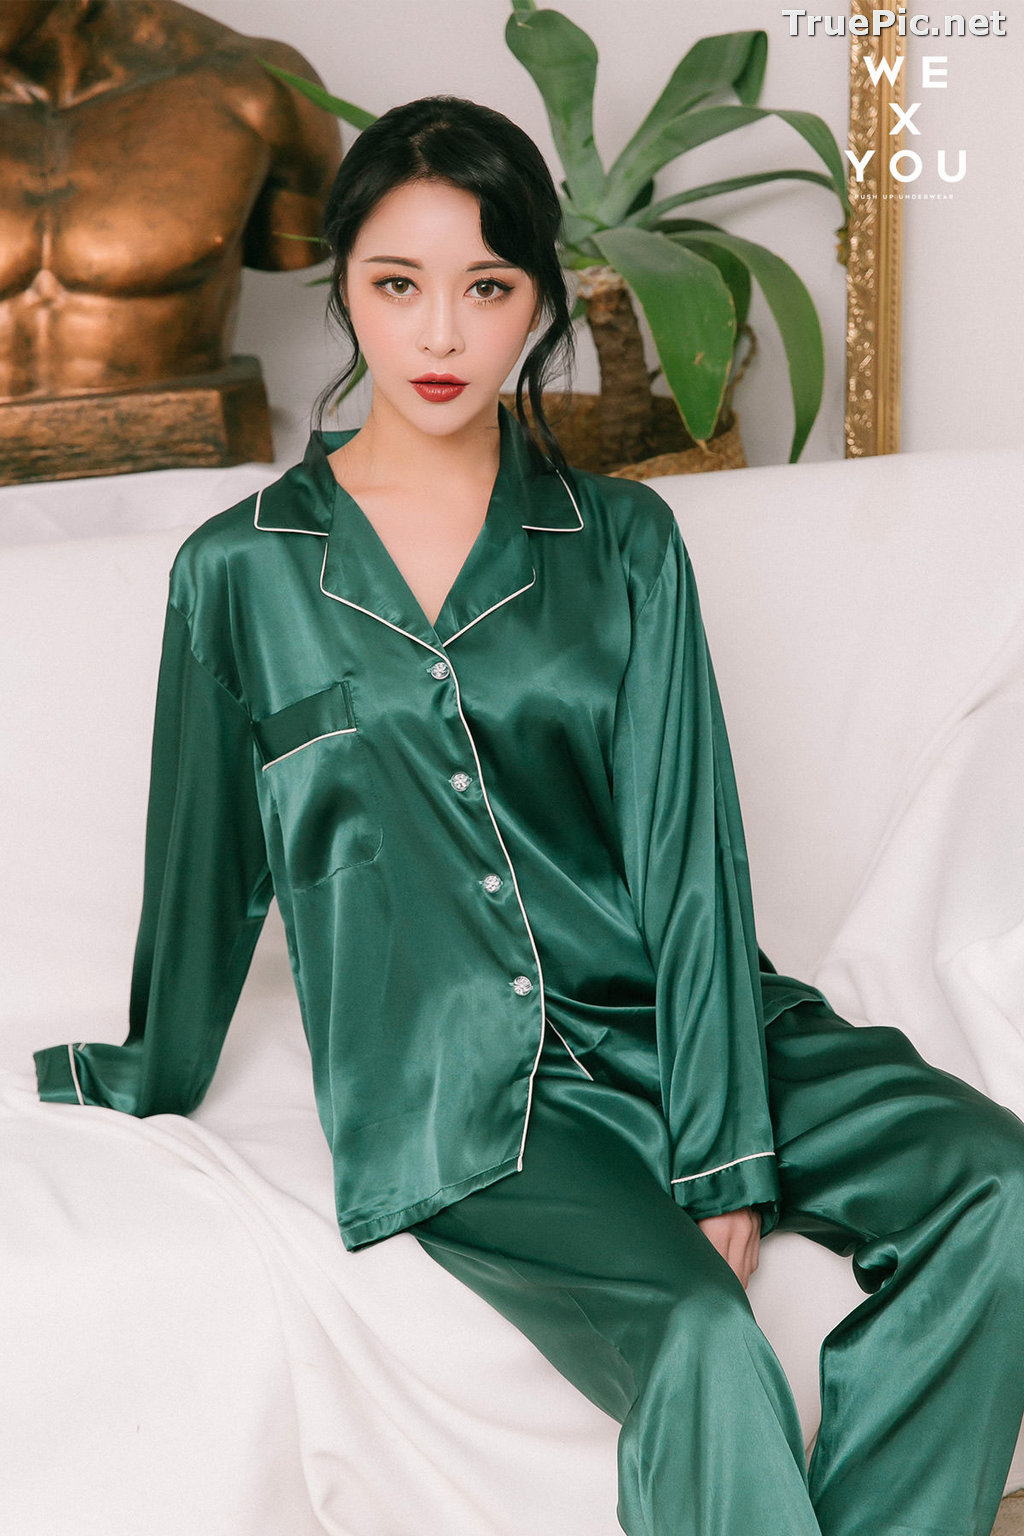 Image Ryu Hyeonju - Korean Fashion Model - Pijama and Lingerie Set - TruePic.net - Picture-10